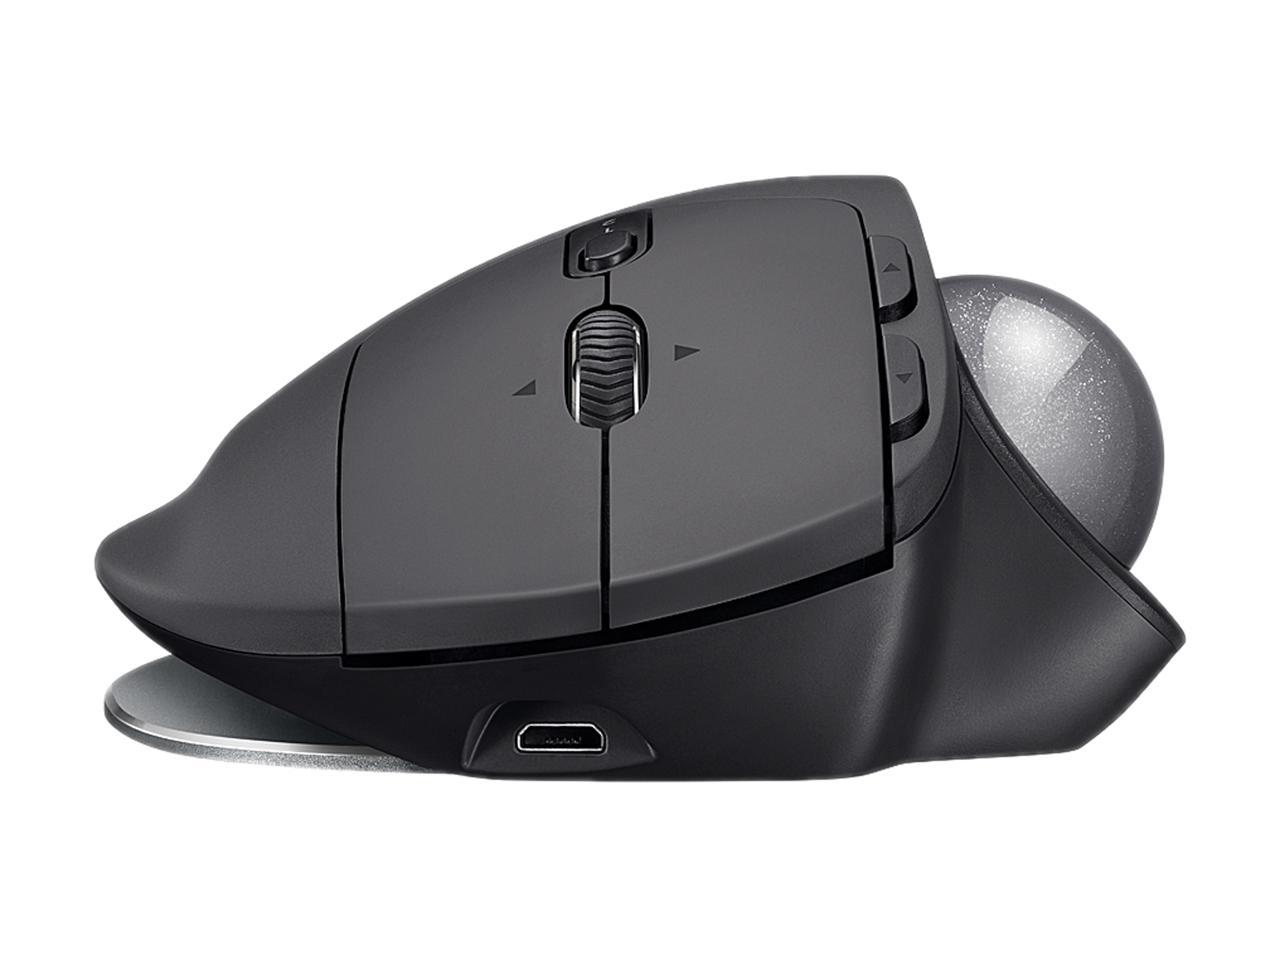 Logitech MX ERGO Advanced Wireless Trackball Mouse - 910-005177